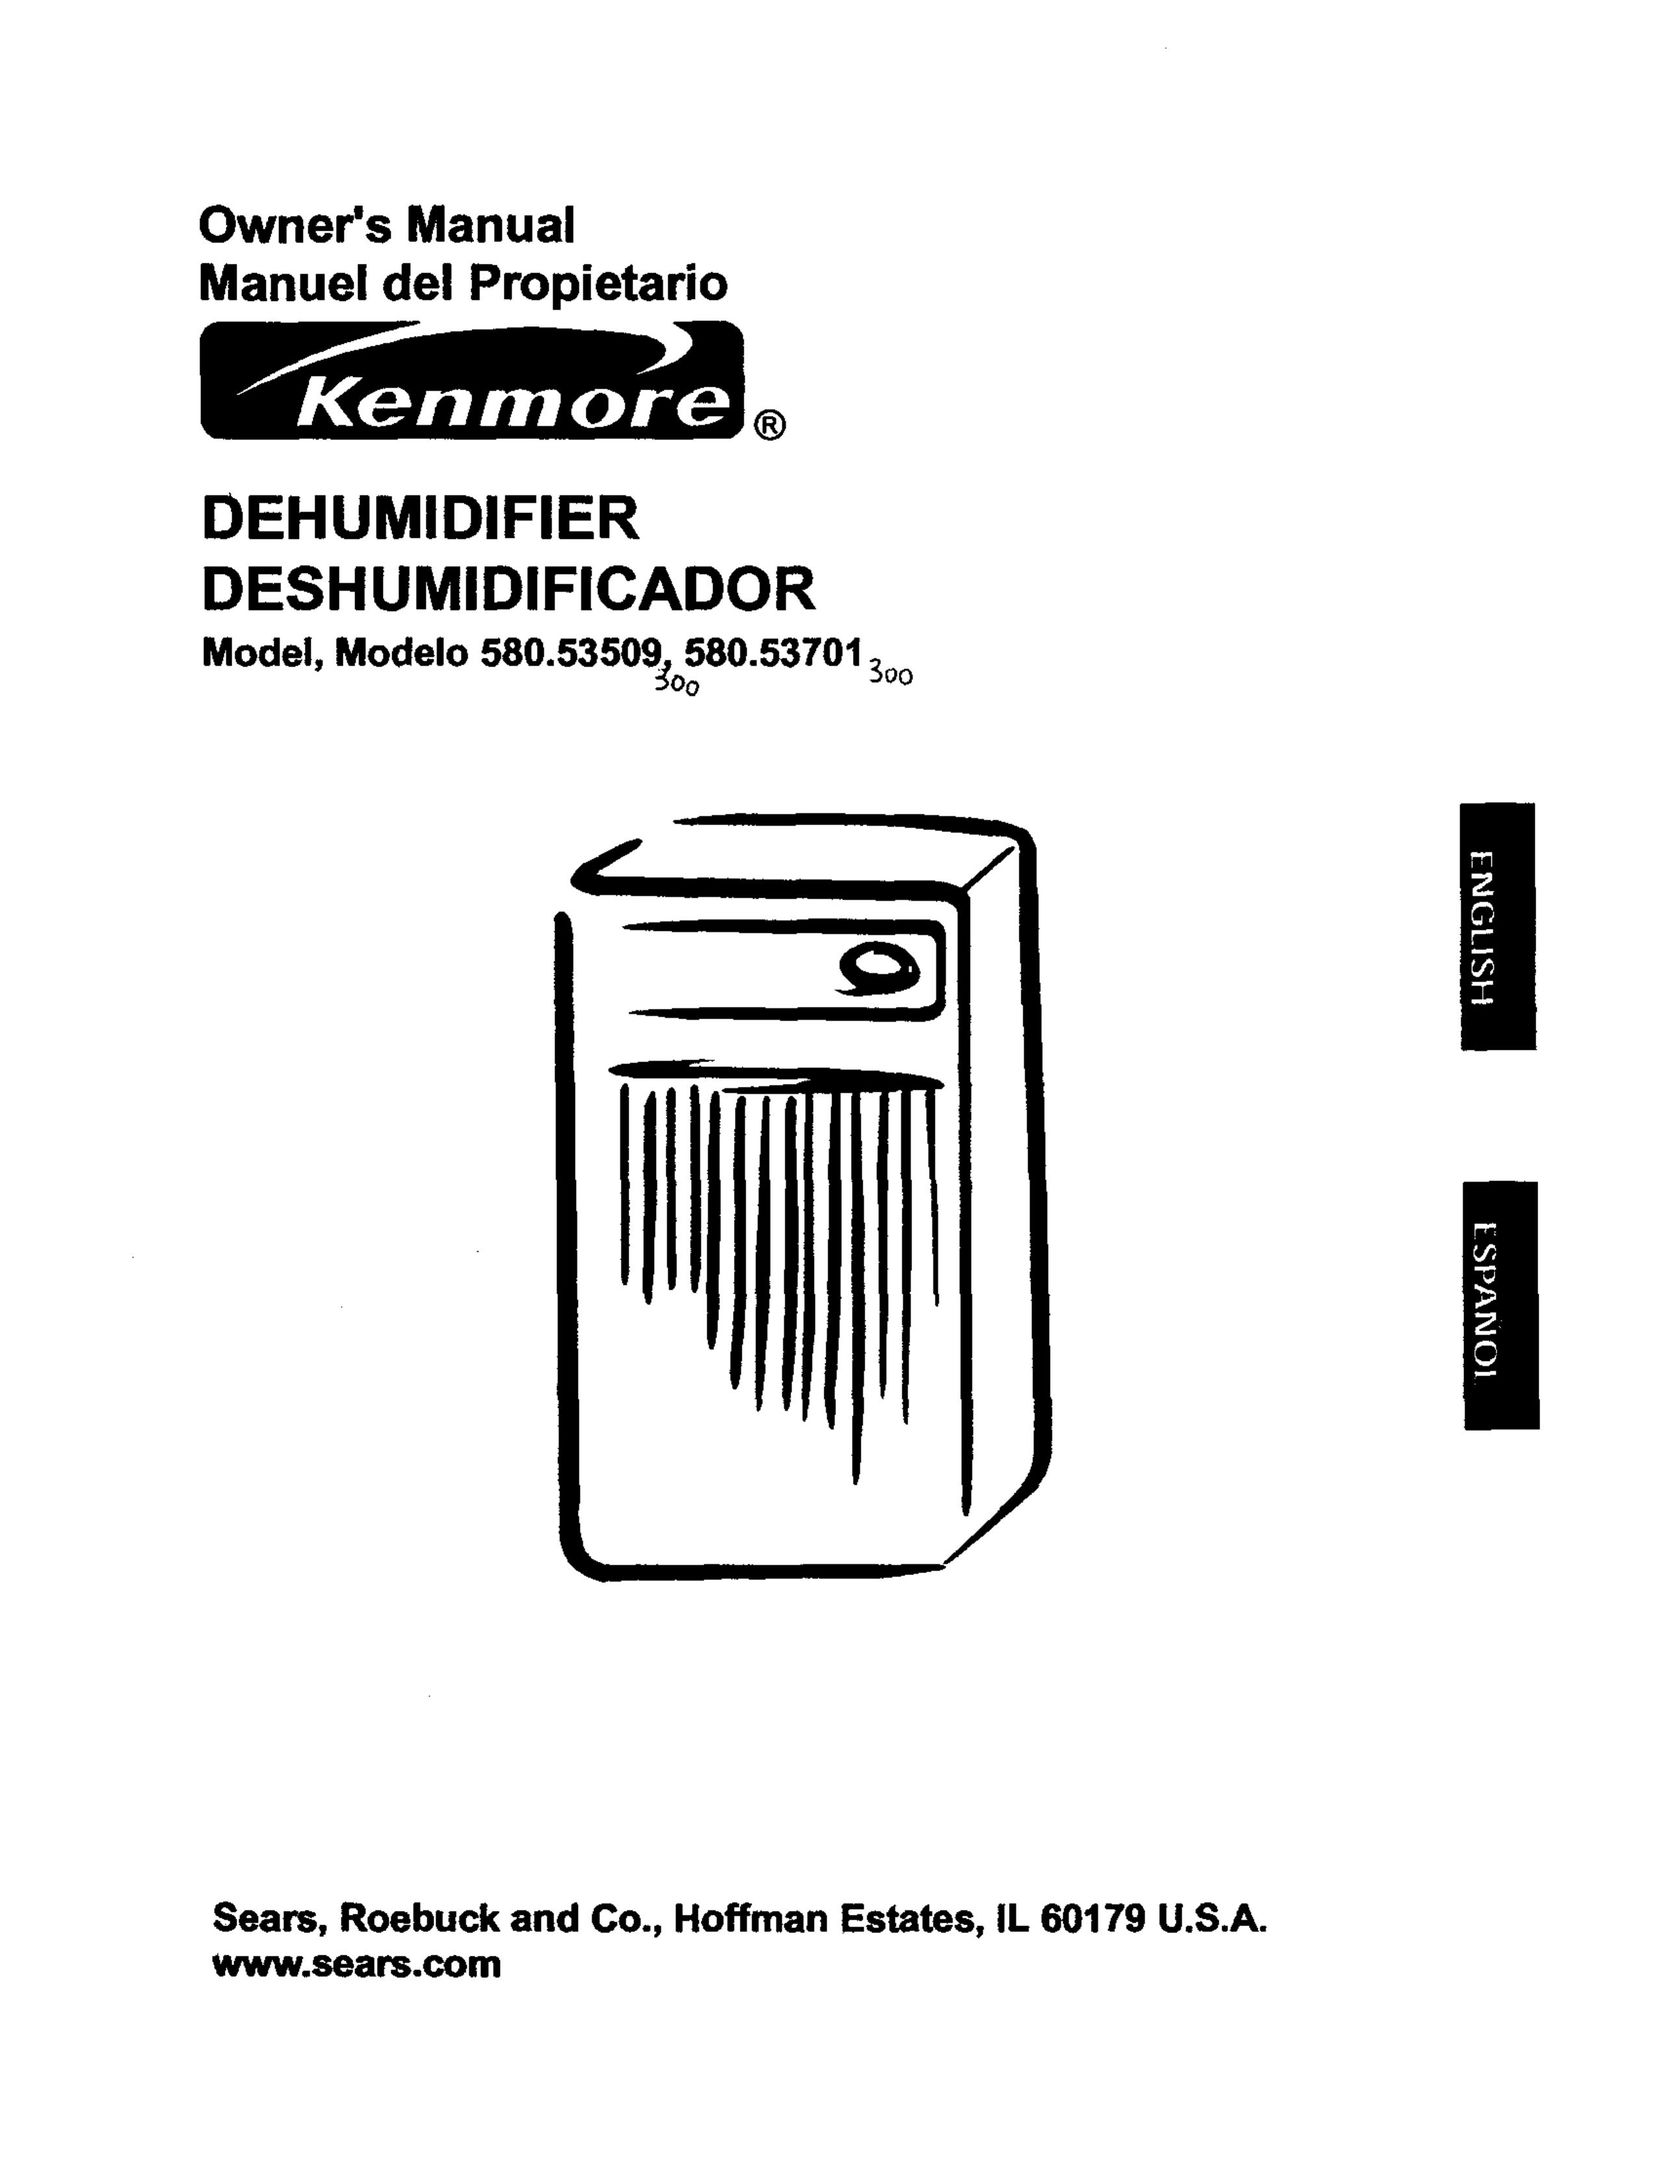 Kenmore 580.53701 Dehumidifier User Manual